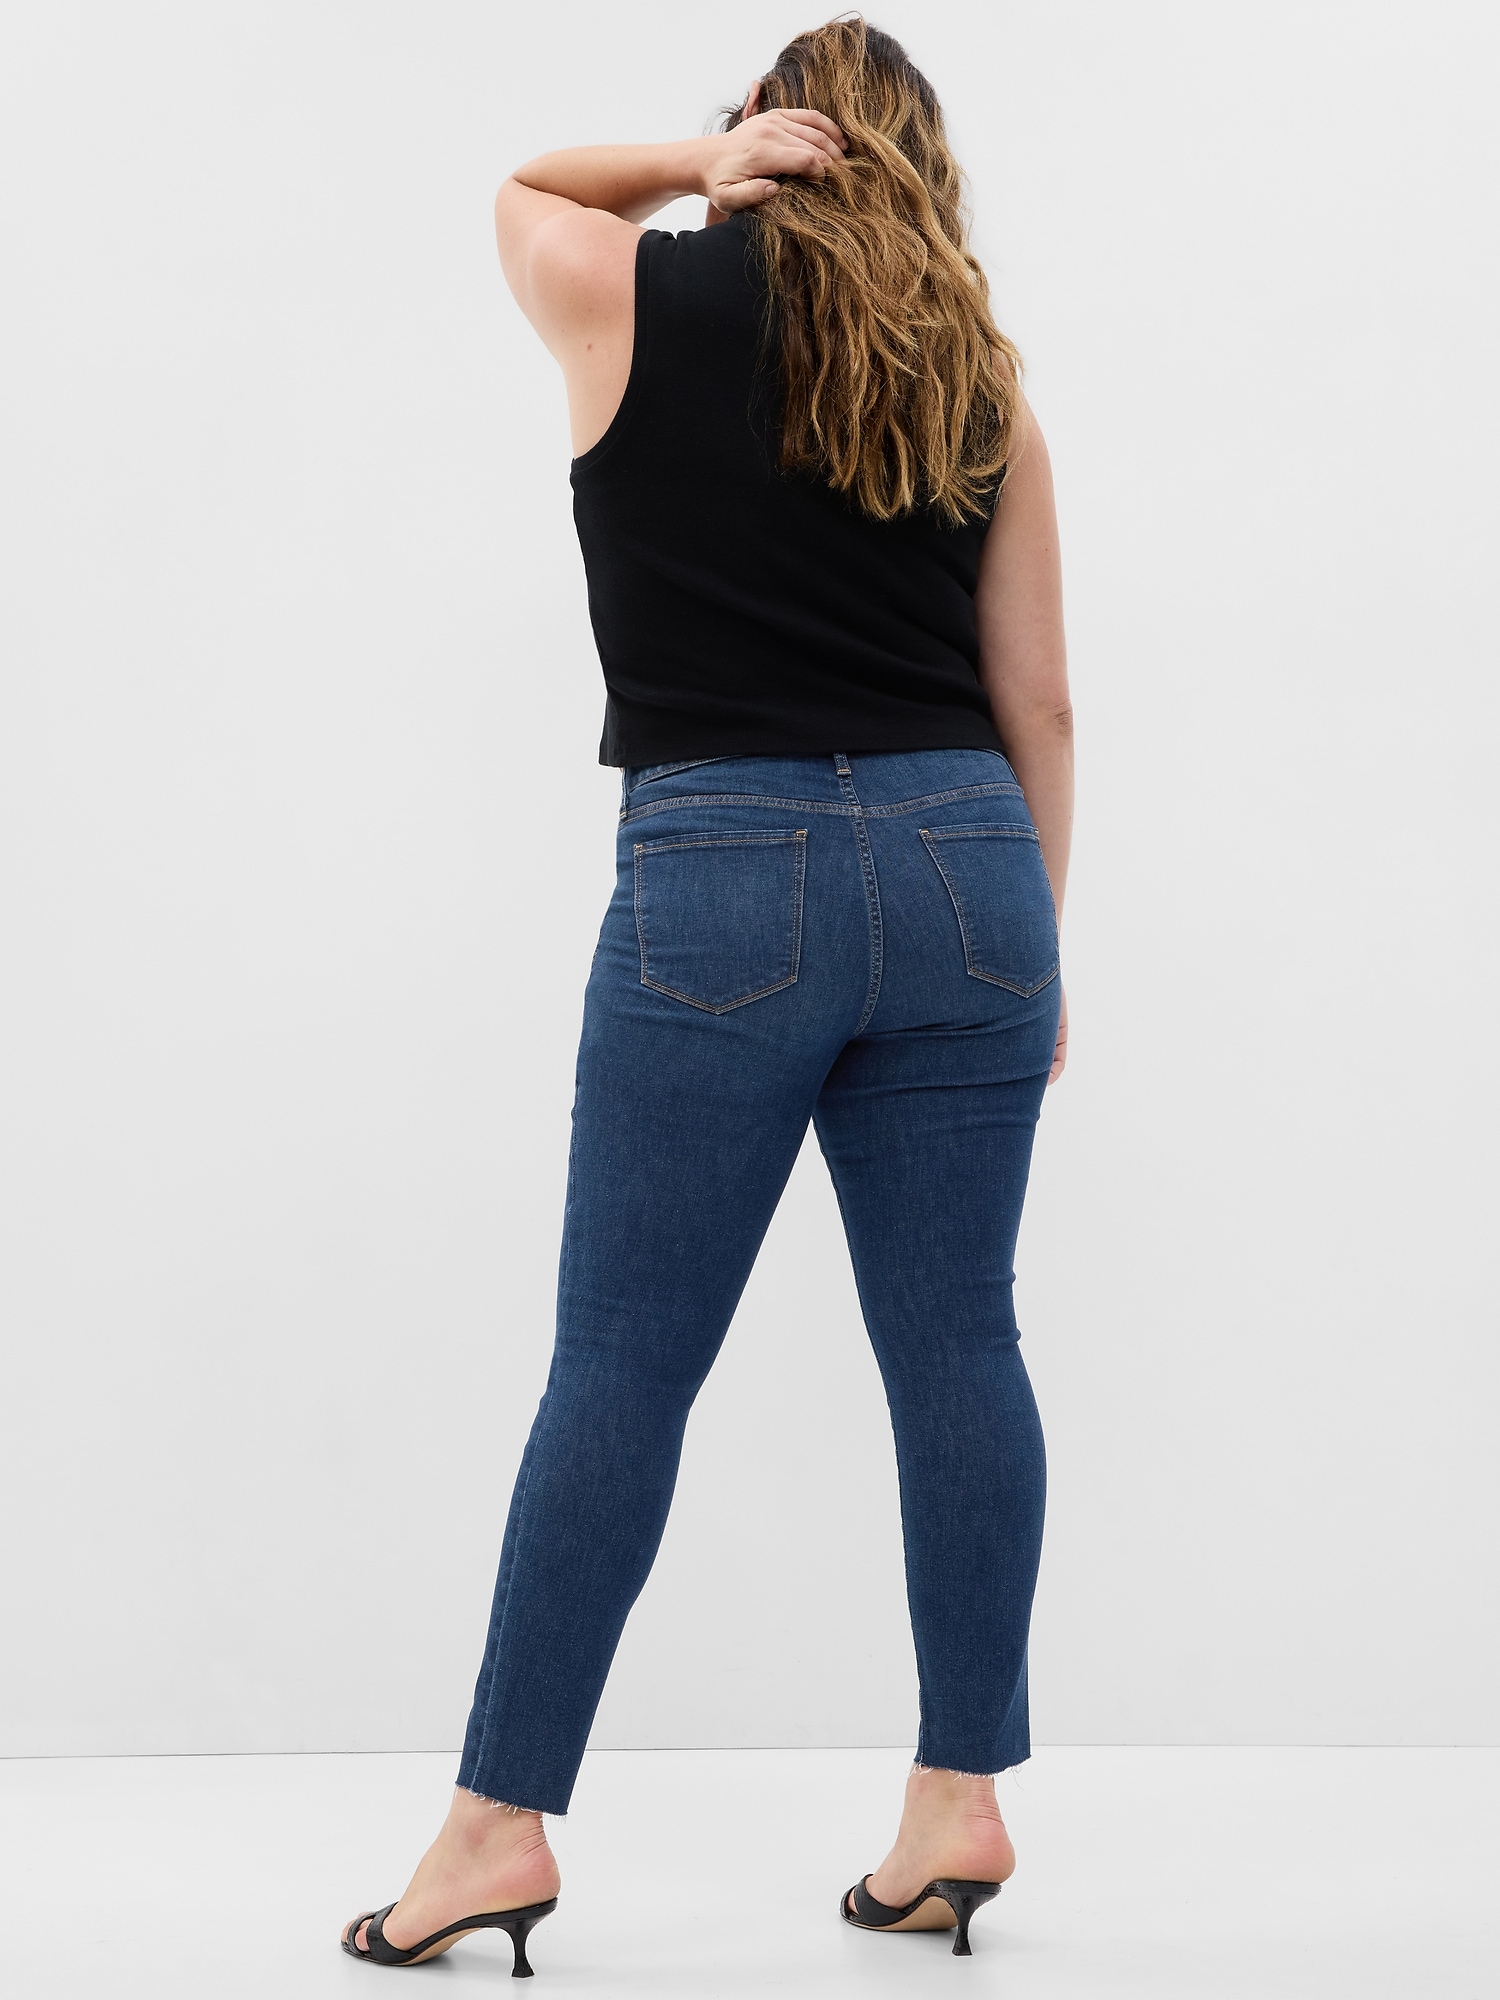 Gap Blue Denim High Rise Button Fly Universal Legging Jeans Women's Size 10